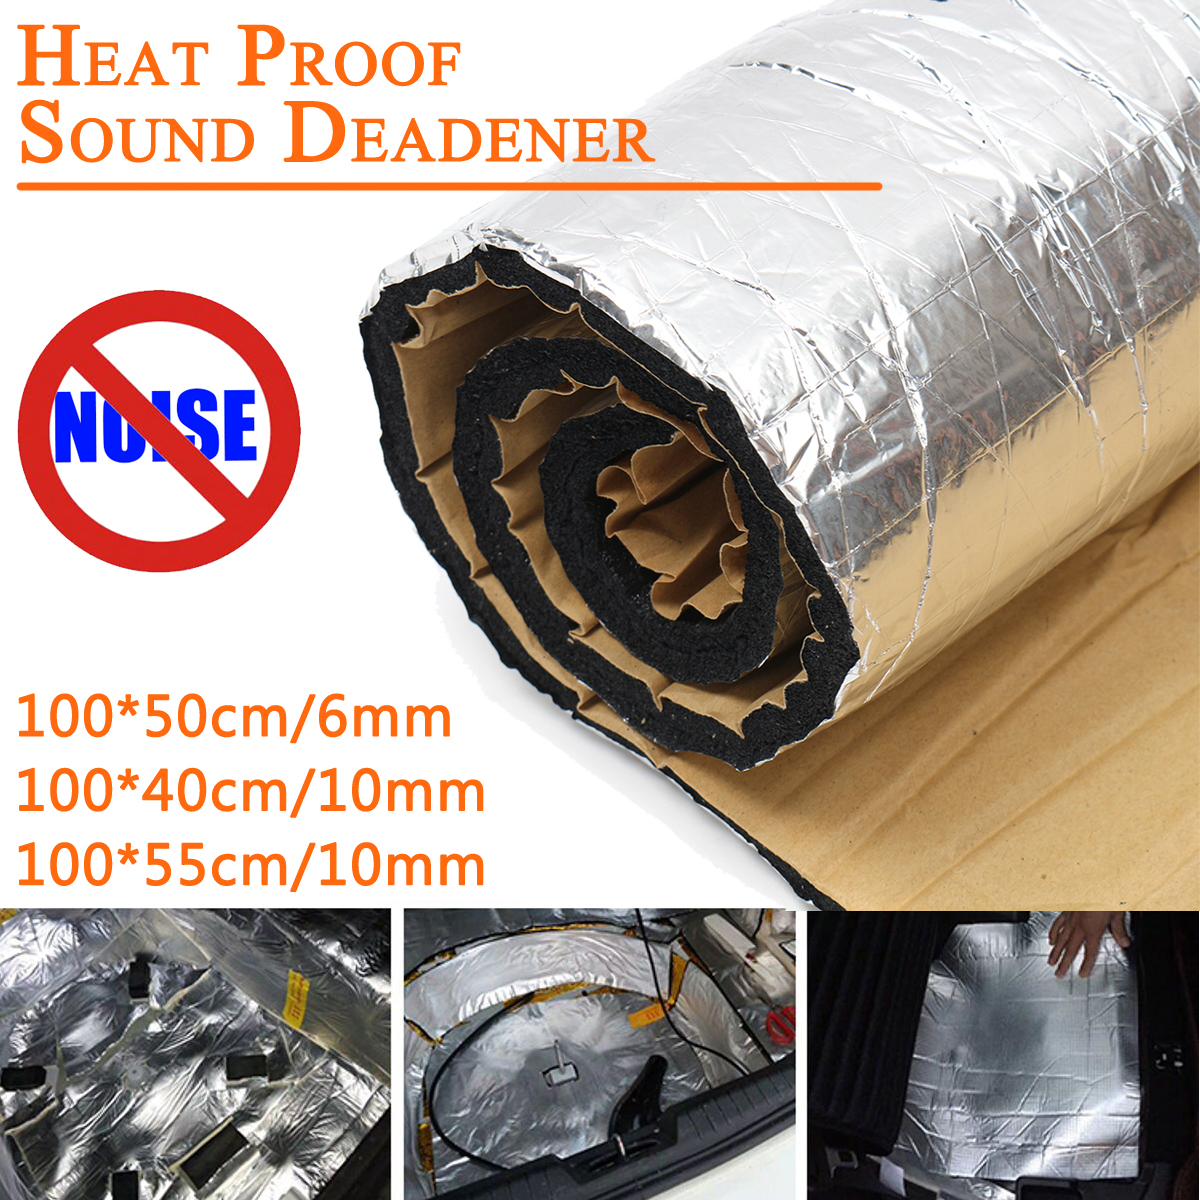 6mm/10mm Car Heat Insulation Shield 